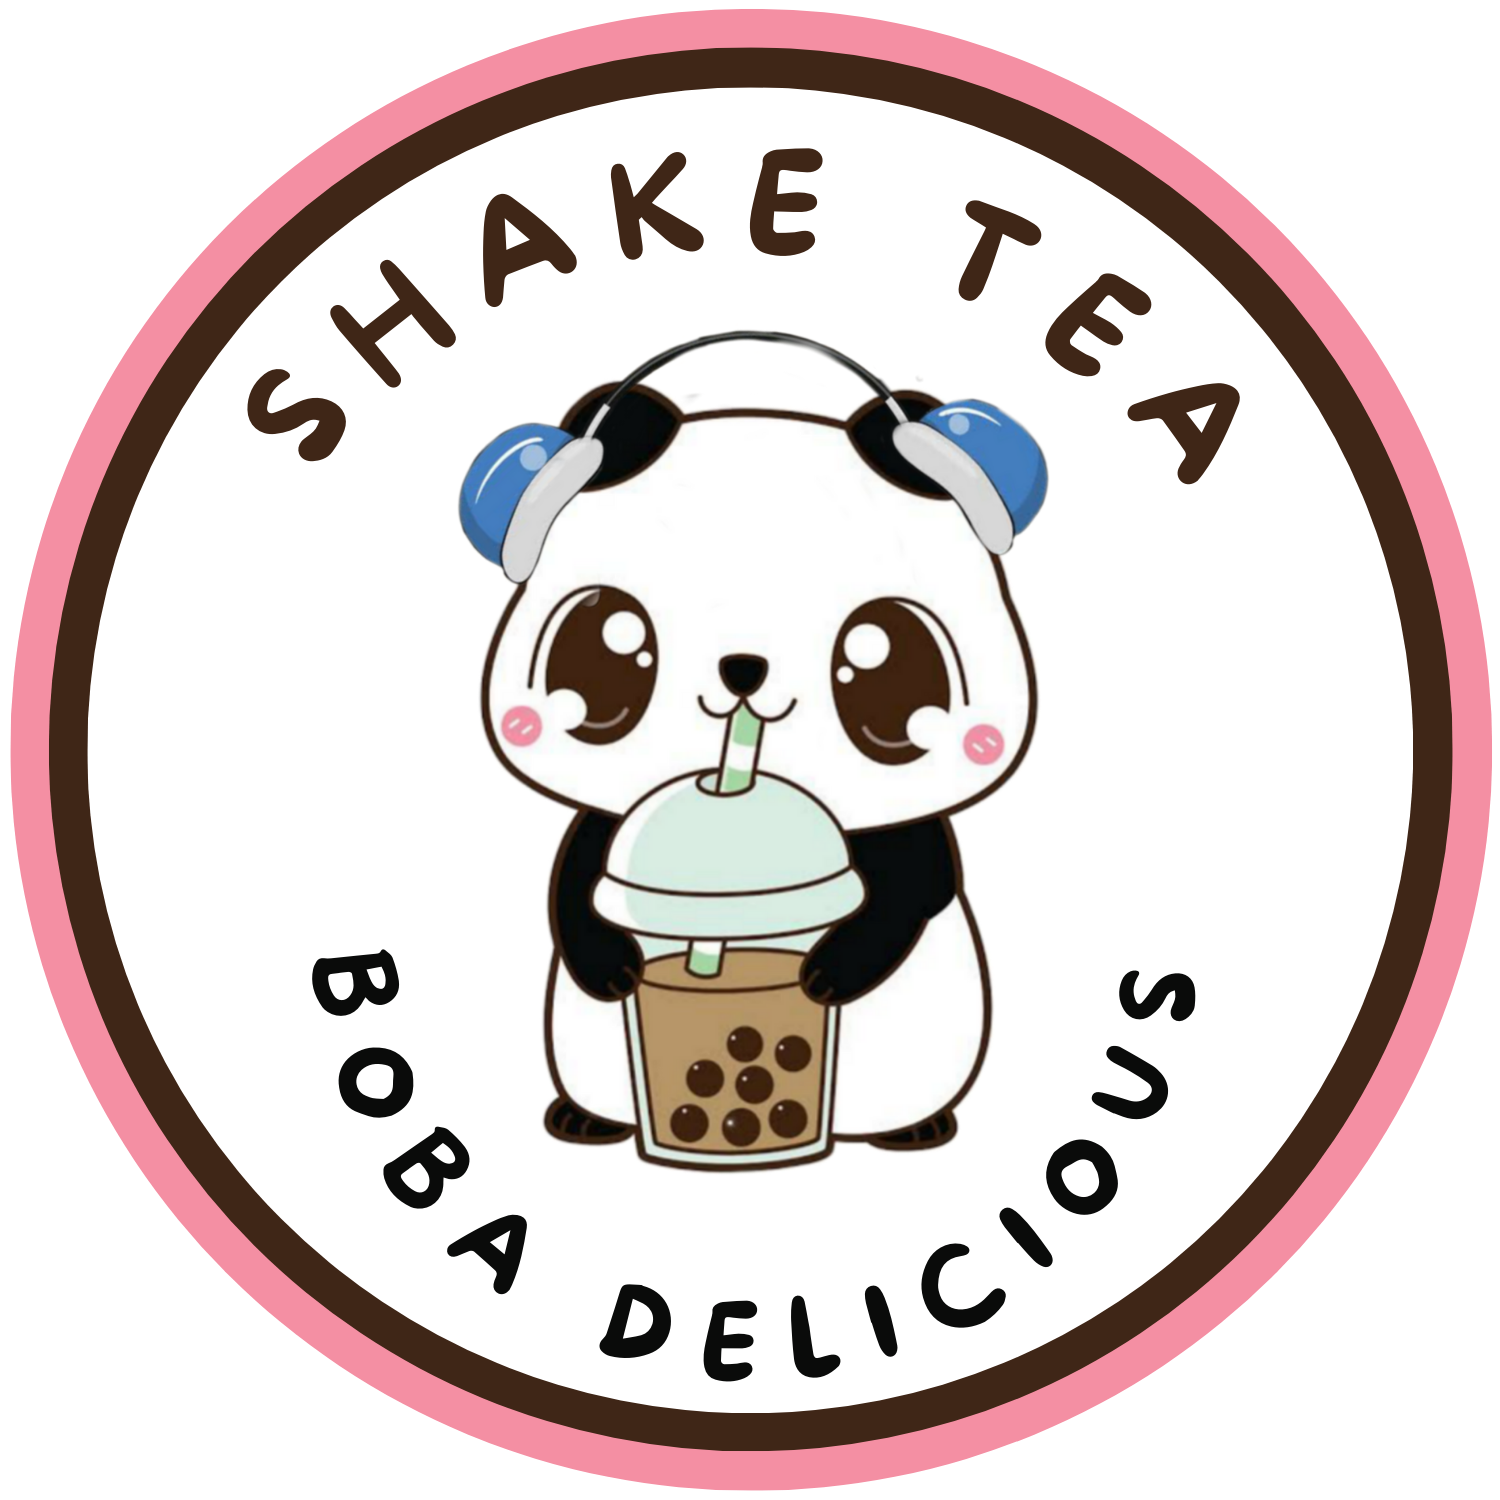 Bubble Tea : Sticker Sheet by Cherry Rabbit